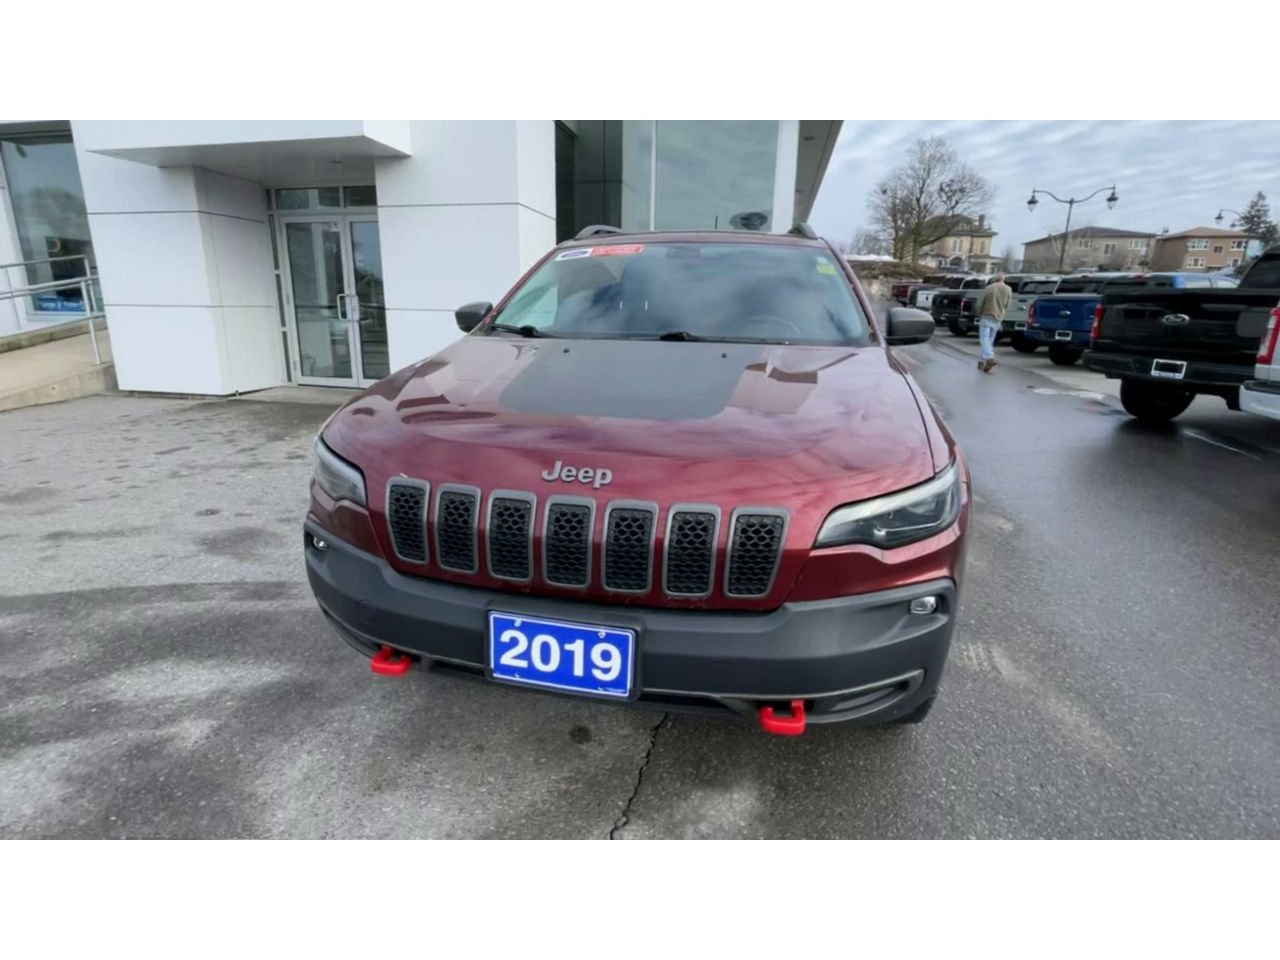 2019 Jeep Cherokee - P21291 Full Image 3